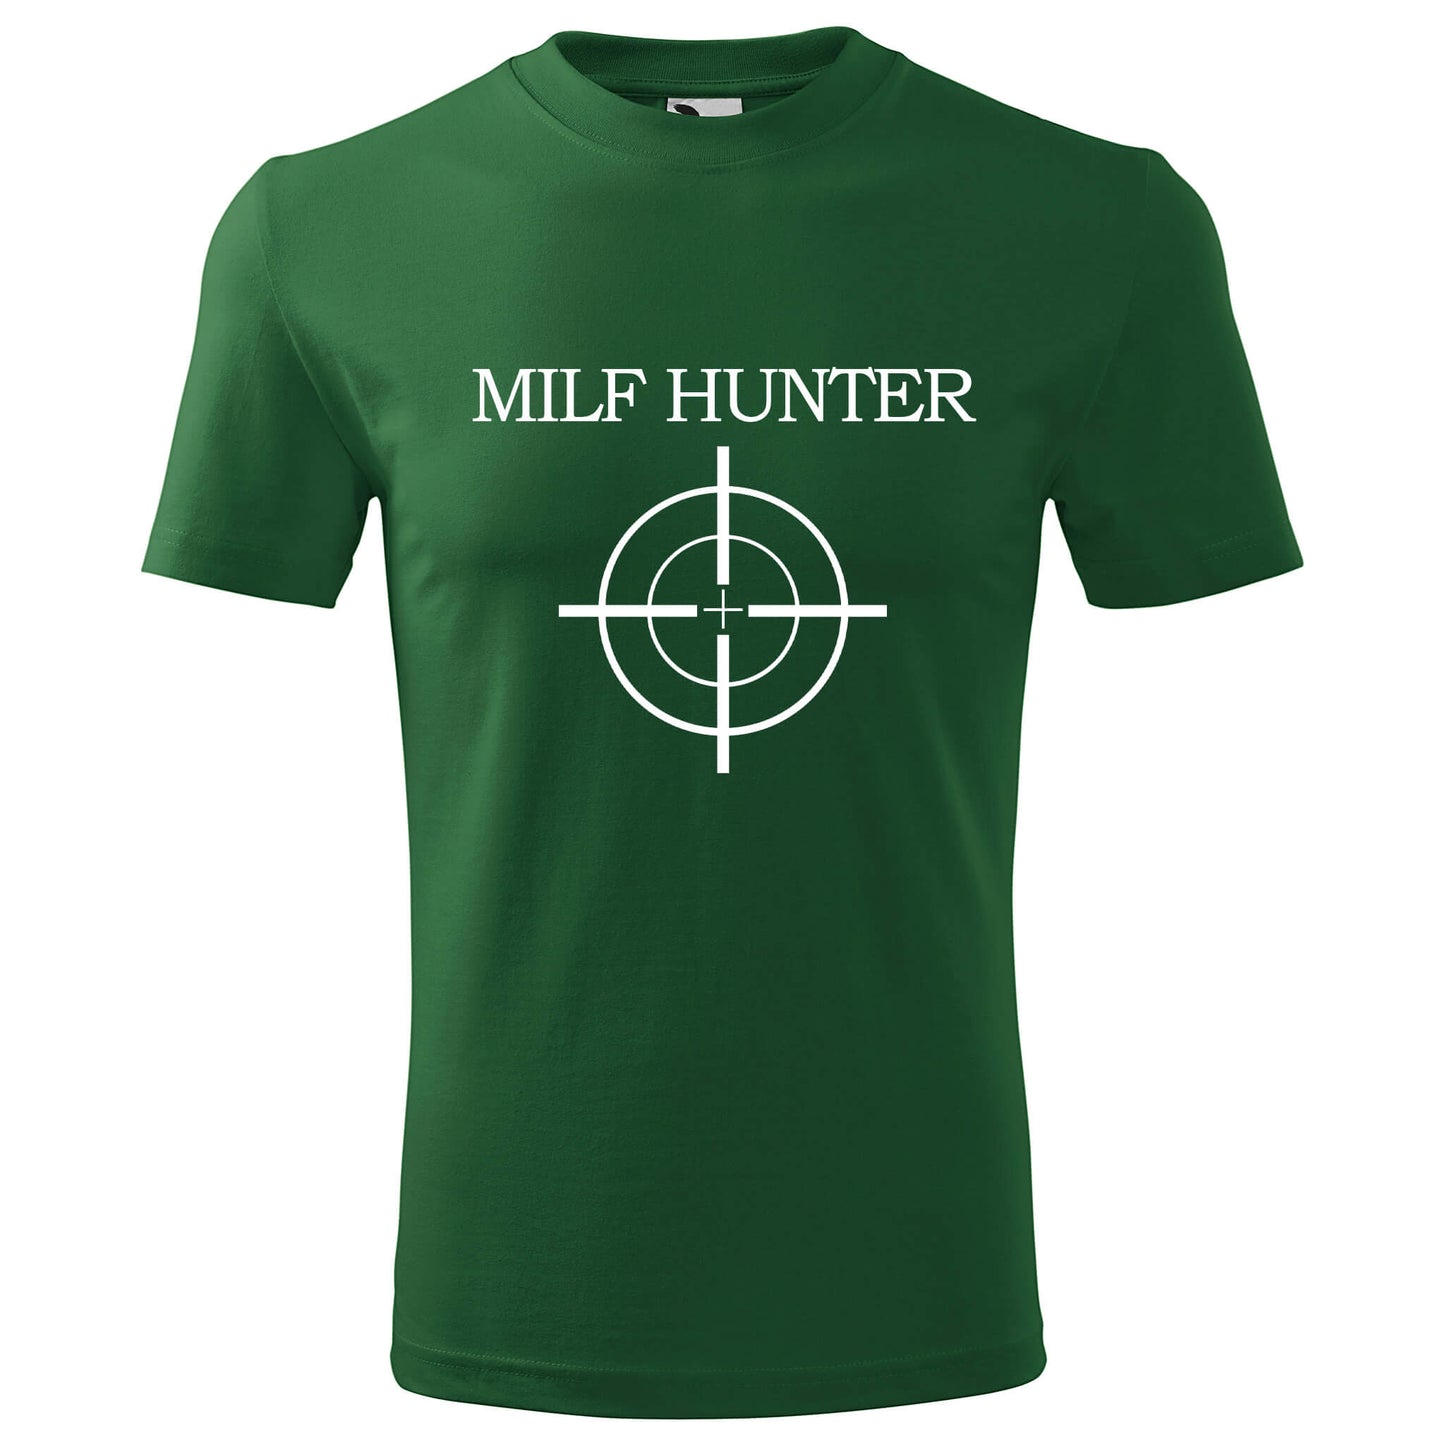 T-shirt - Milf hunter - rvdesignprint